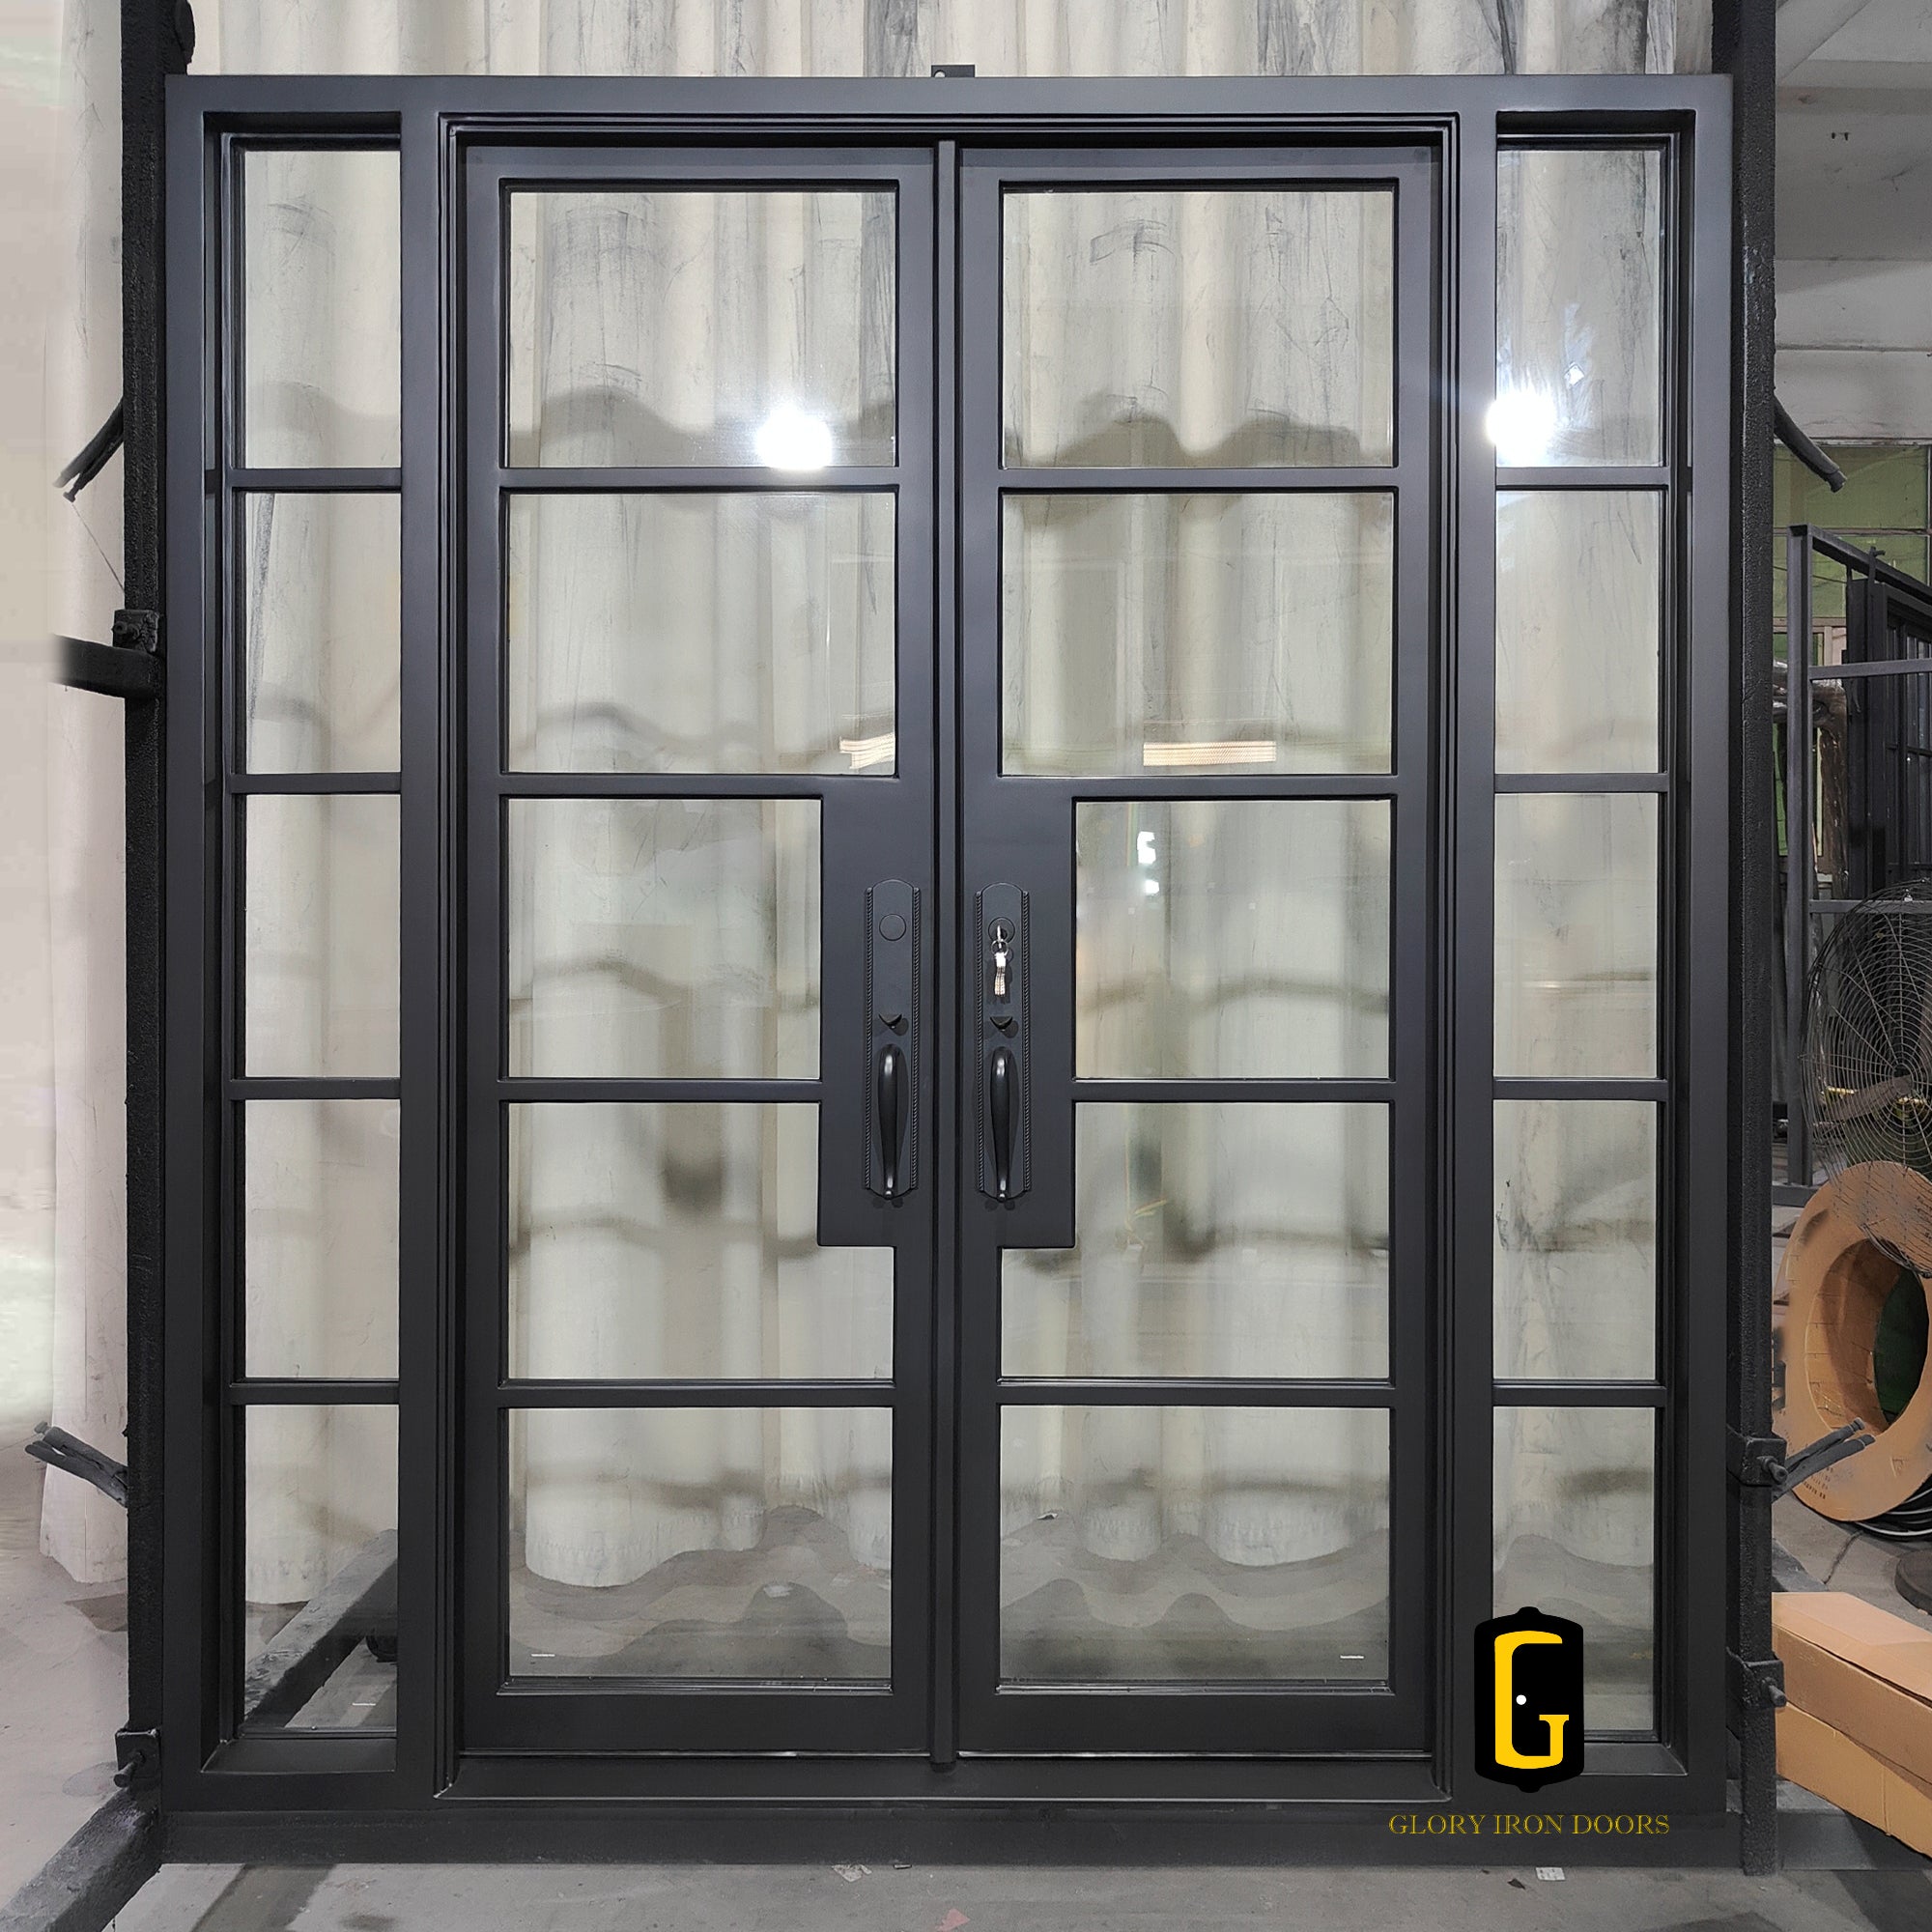 gloryirondoors thermal break iron french single door with two sidelights